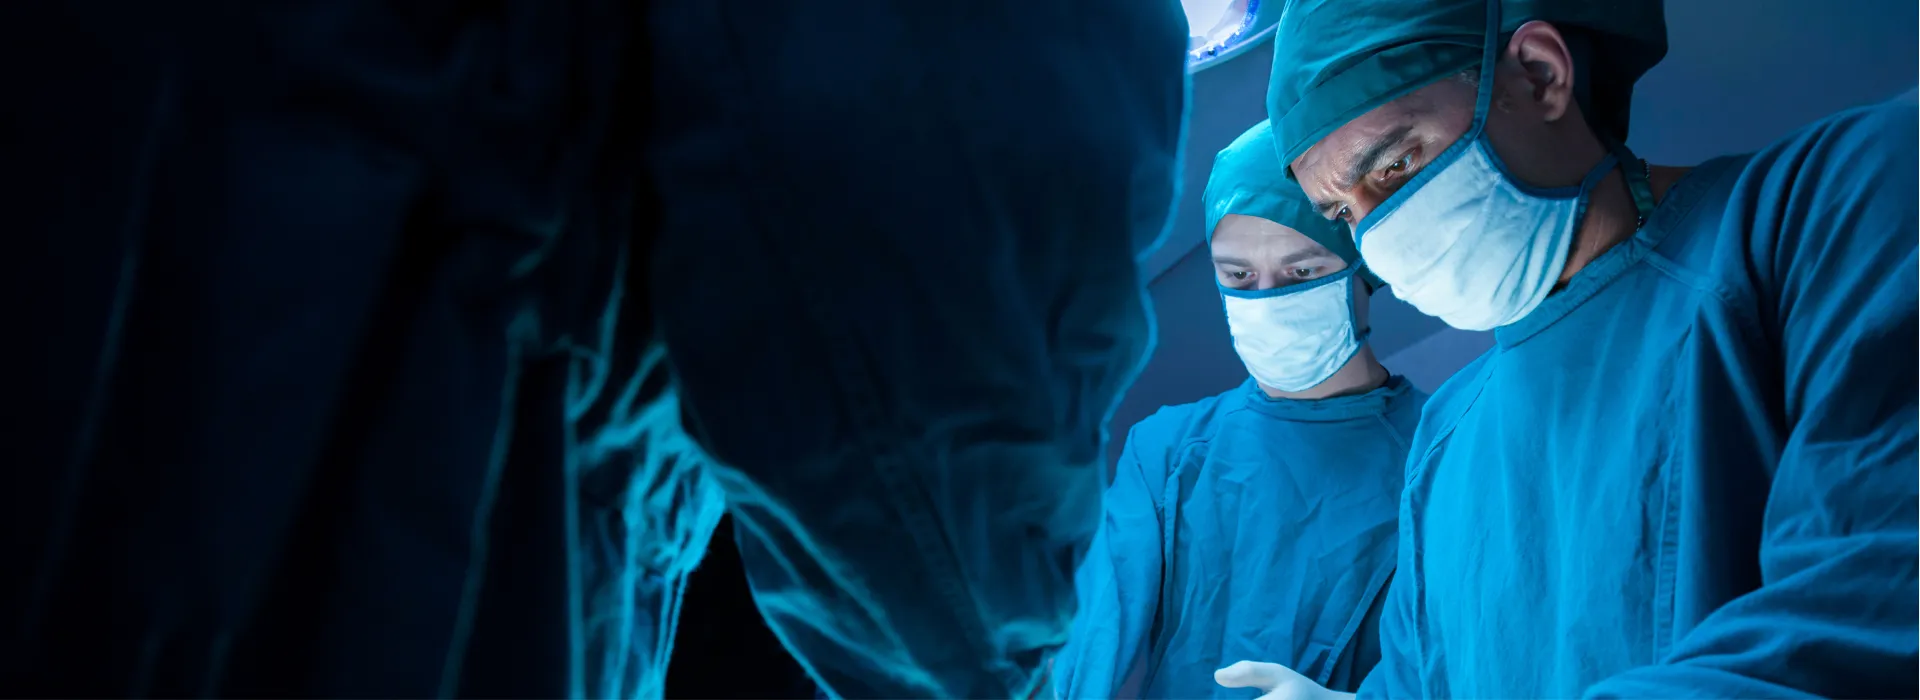 Diplomado en fundamentos de laparoscopia javeriana cali educacion continua salud